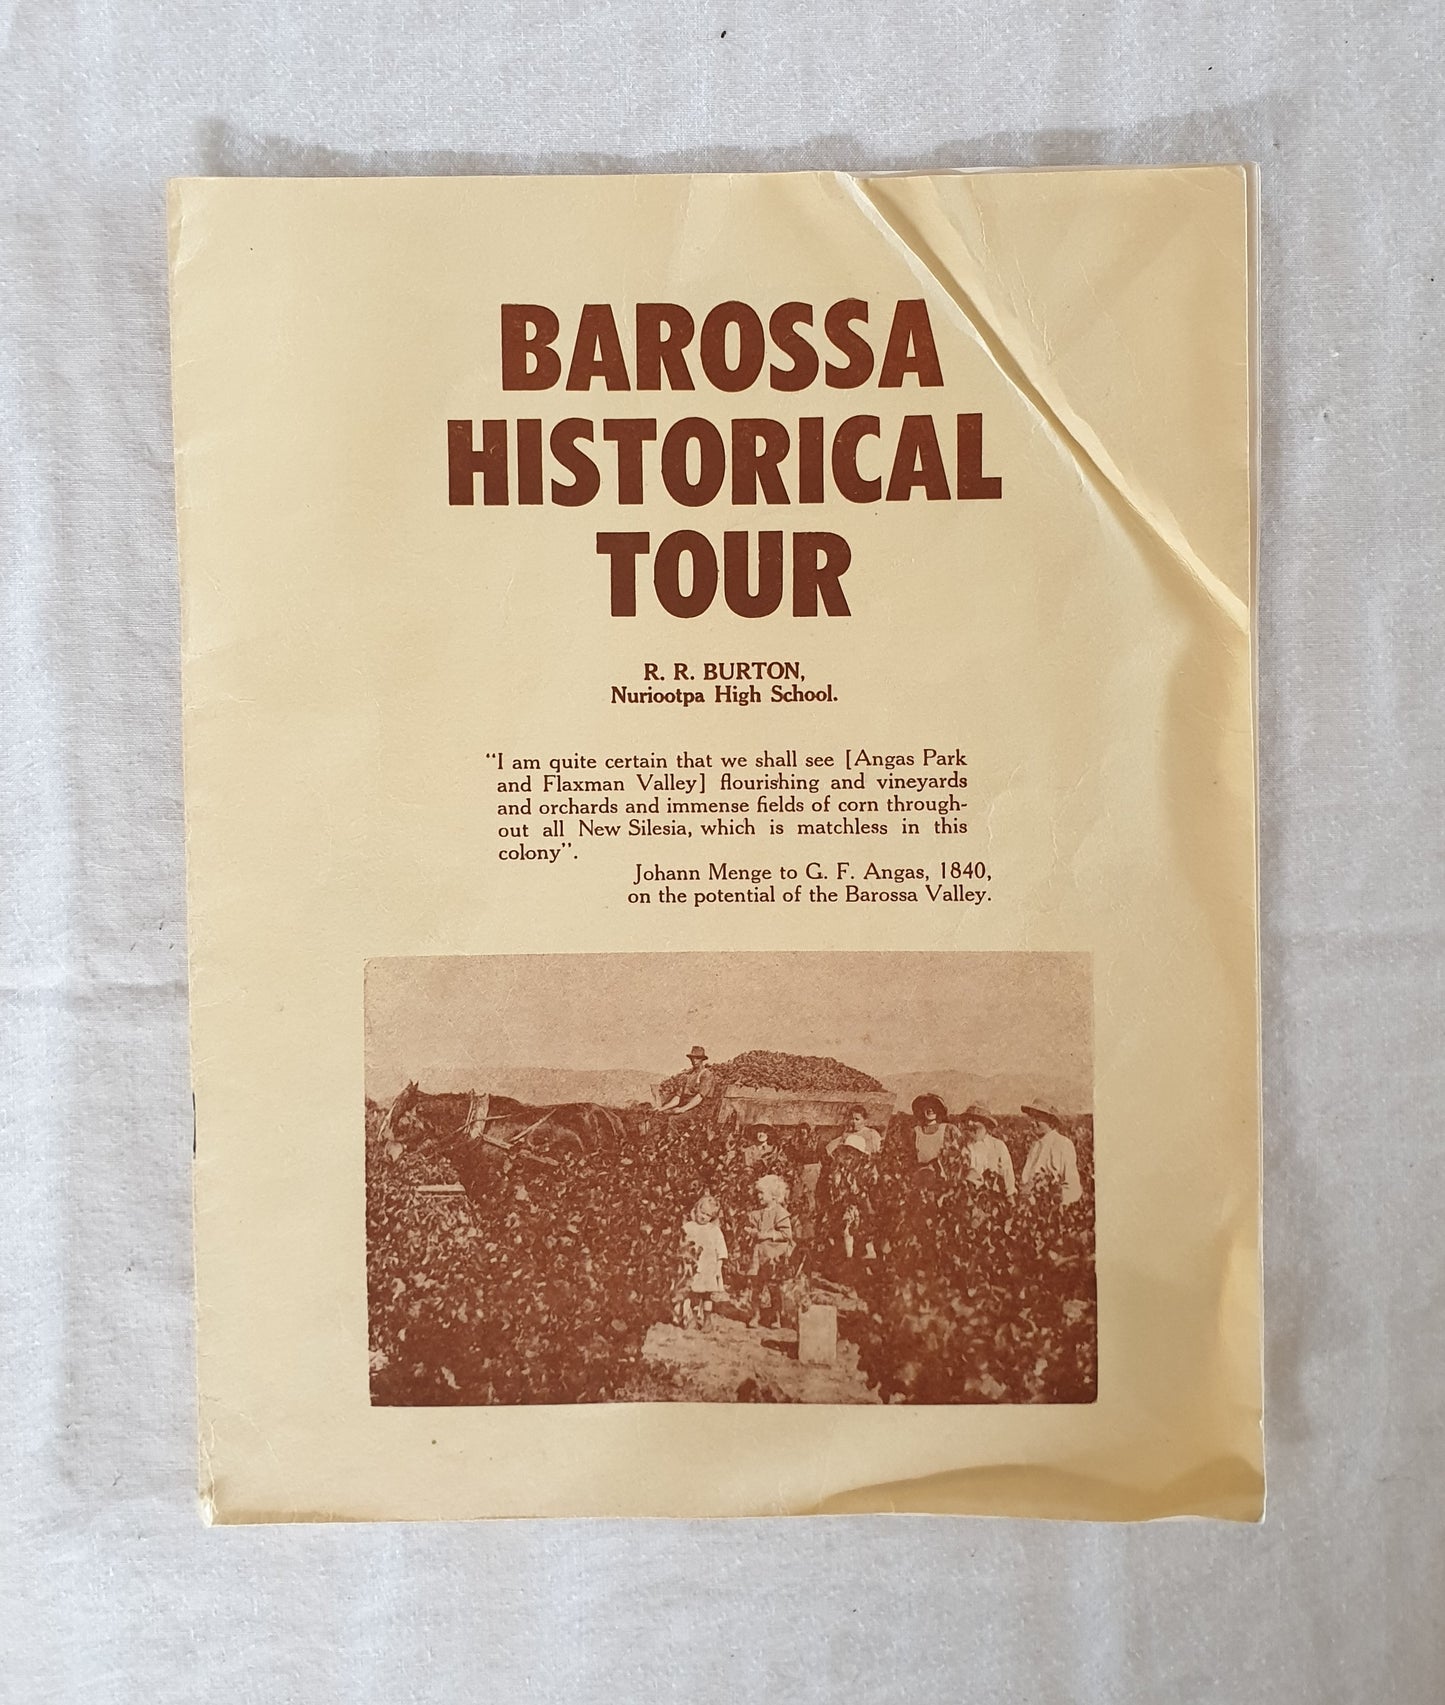 Barossa Historical Tour - R. R. Burton